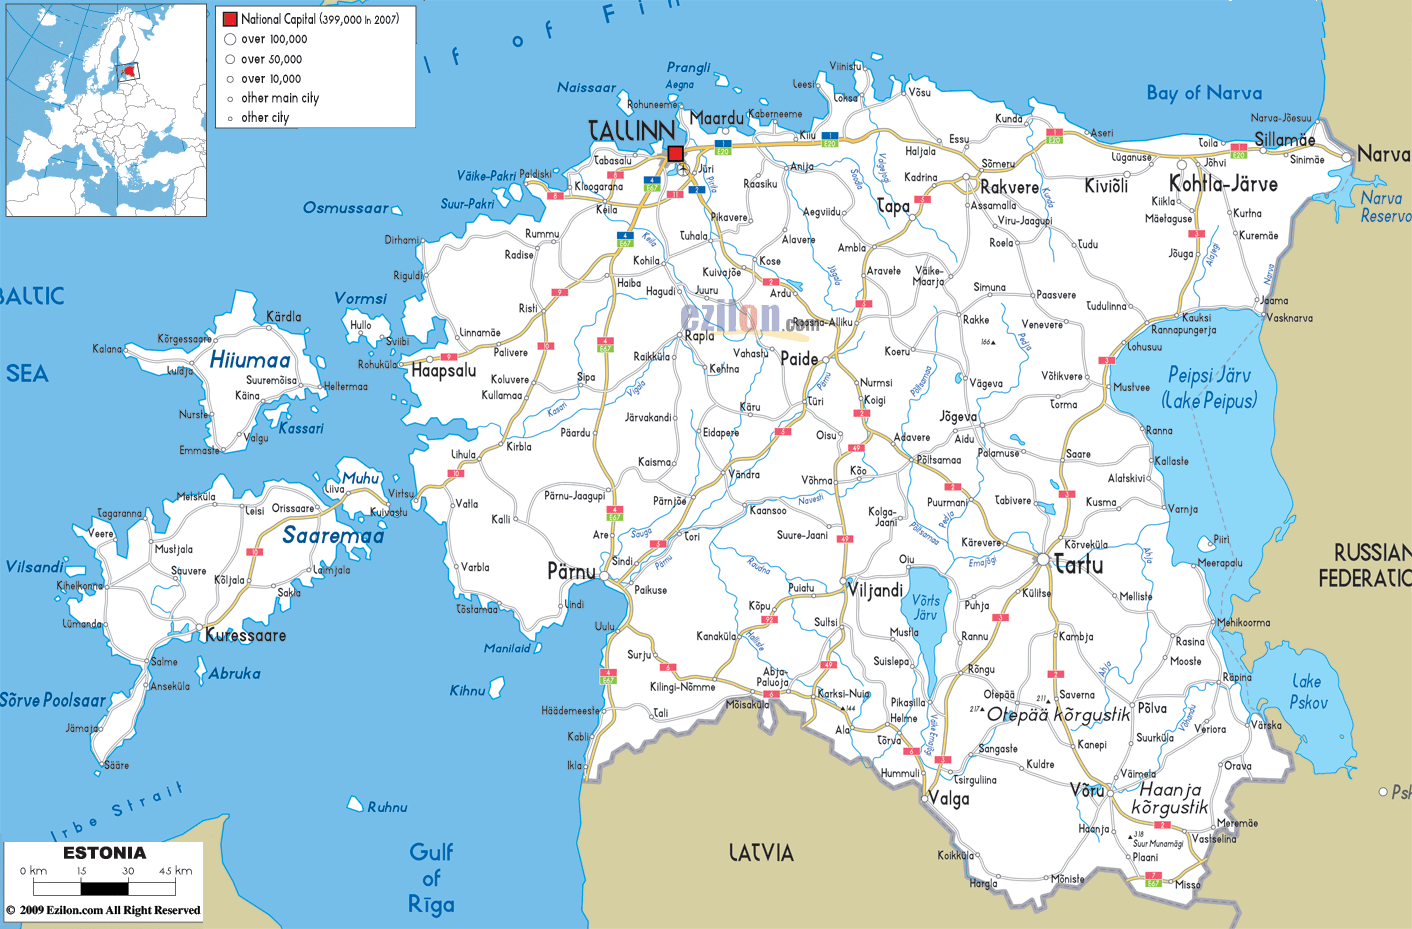 http://www.ezilon.com/maps/images/europe/Estonia-road-map.gif